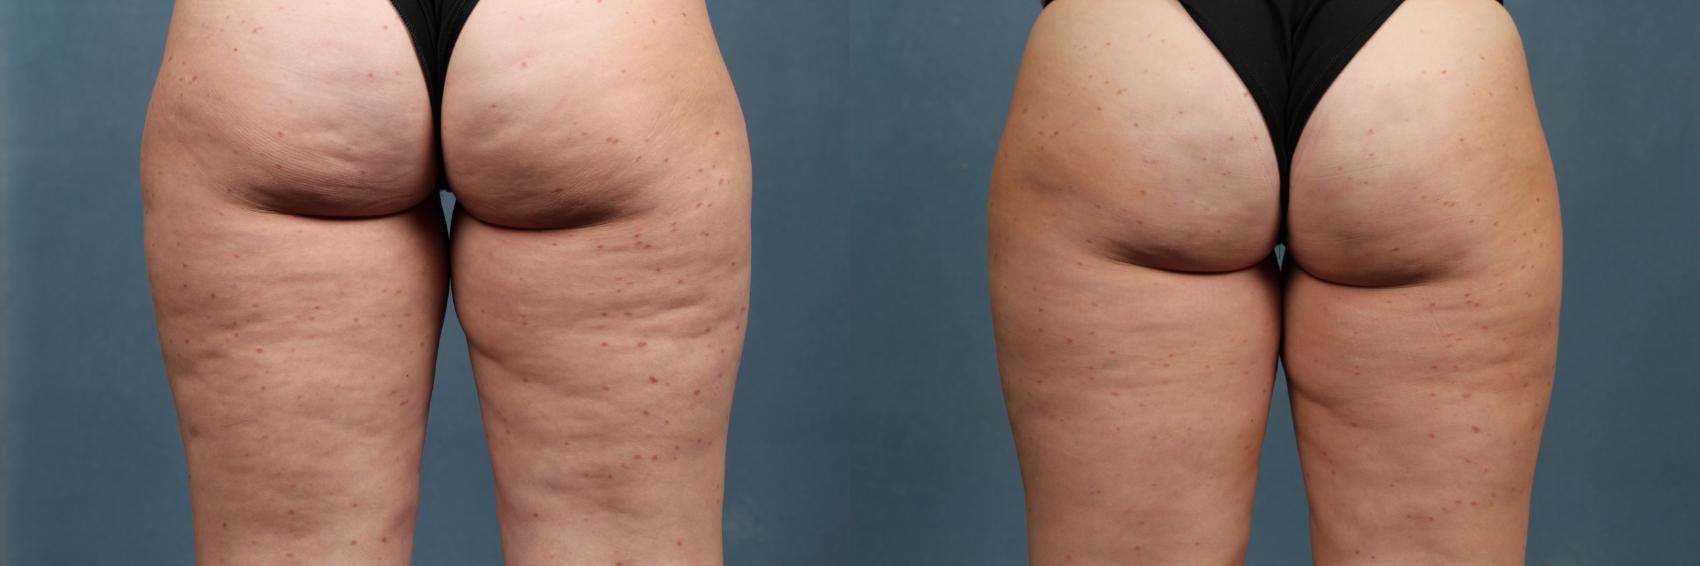 Cellulite Treatments Case 621 Before & After Back | Louisville, KY | CaloSpa® Rejuvenation Center